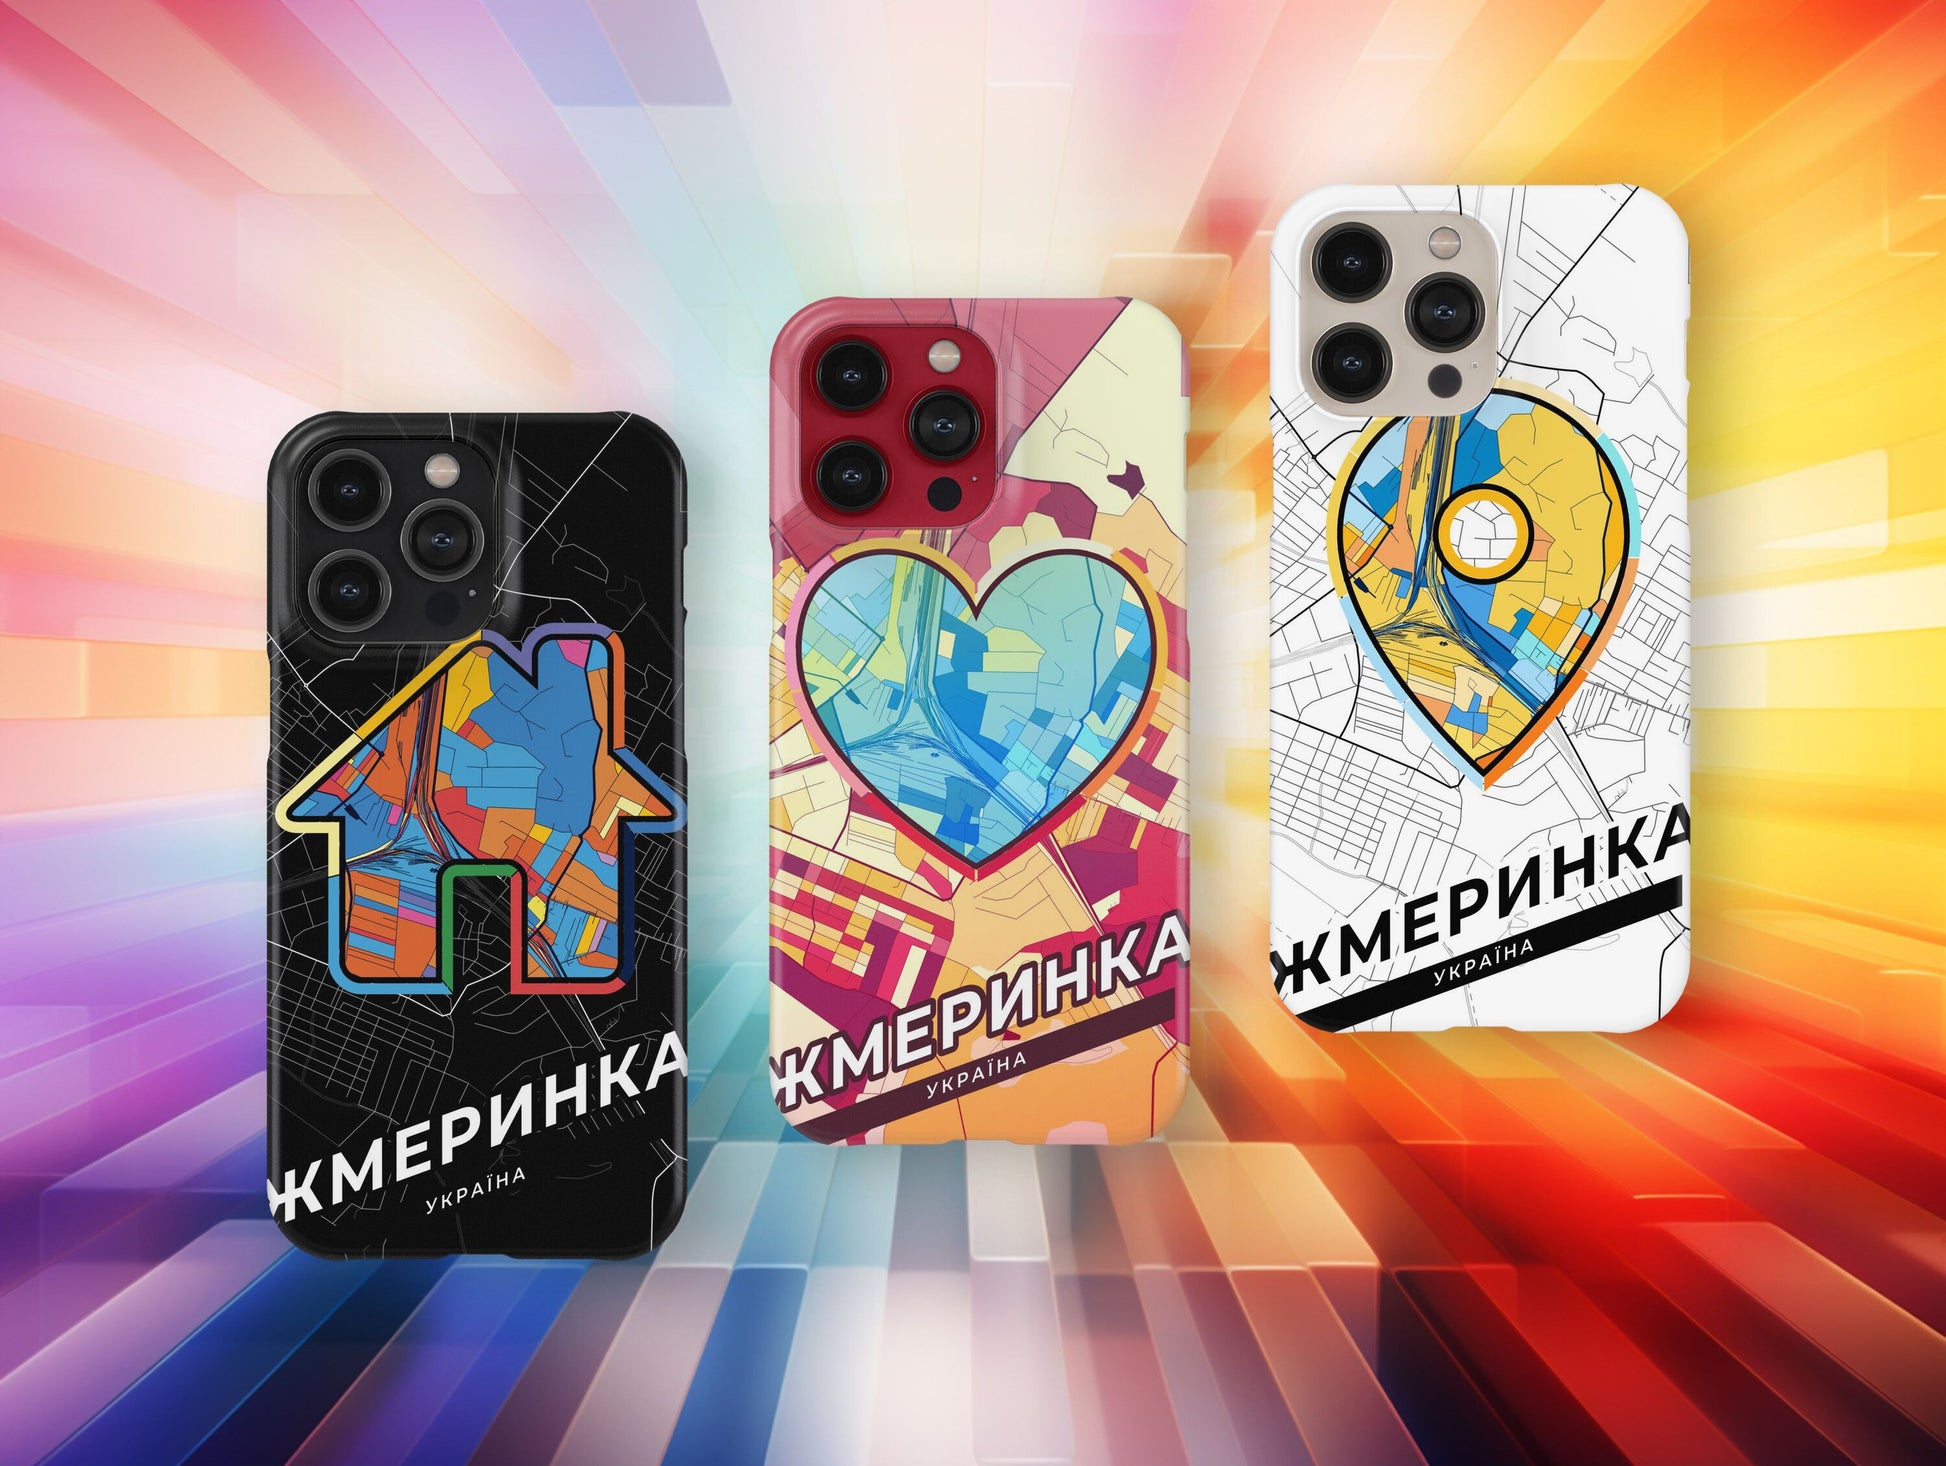 Zhmerynka Ukraine slim phone case with colorful icon